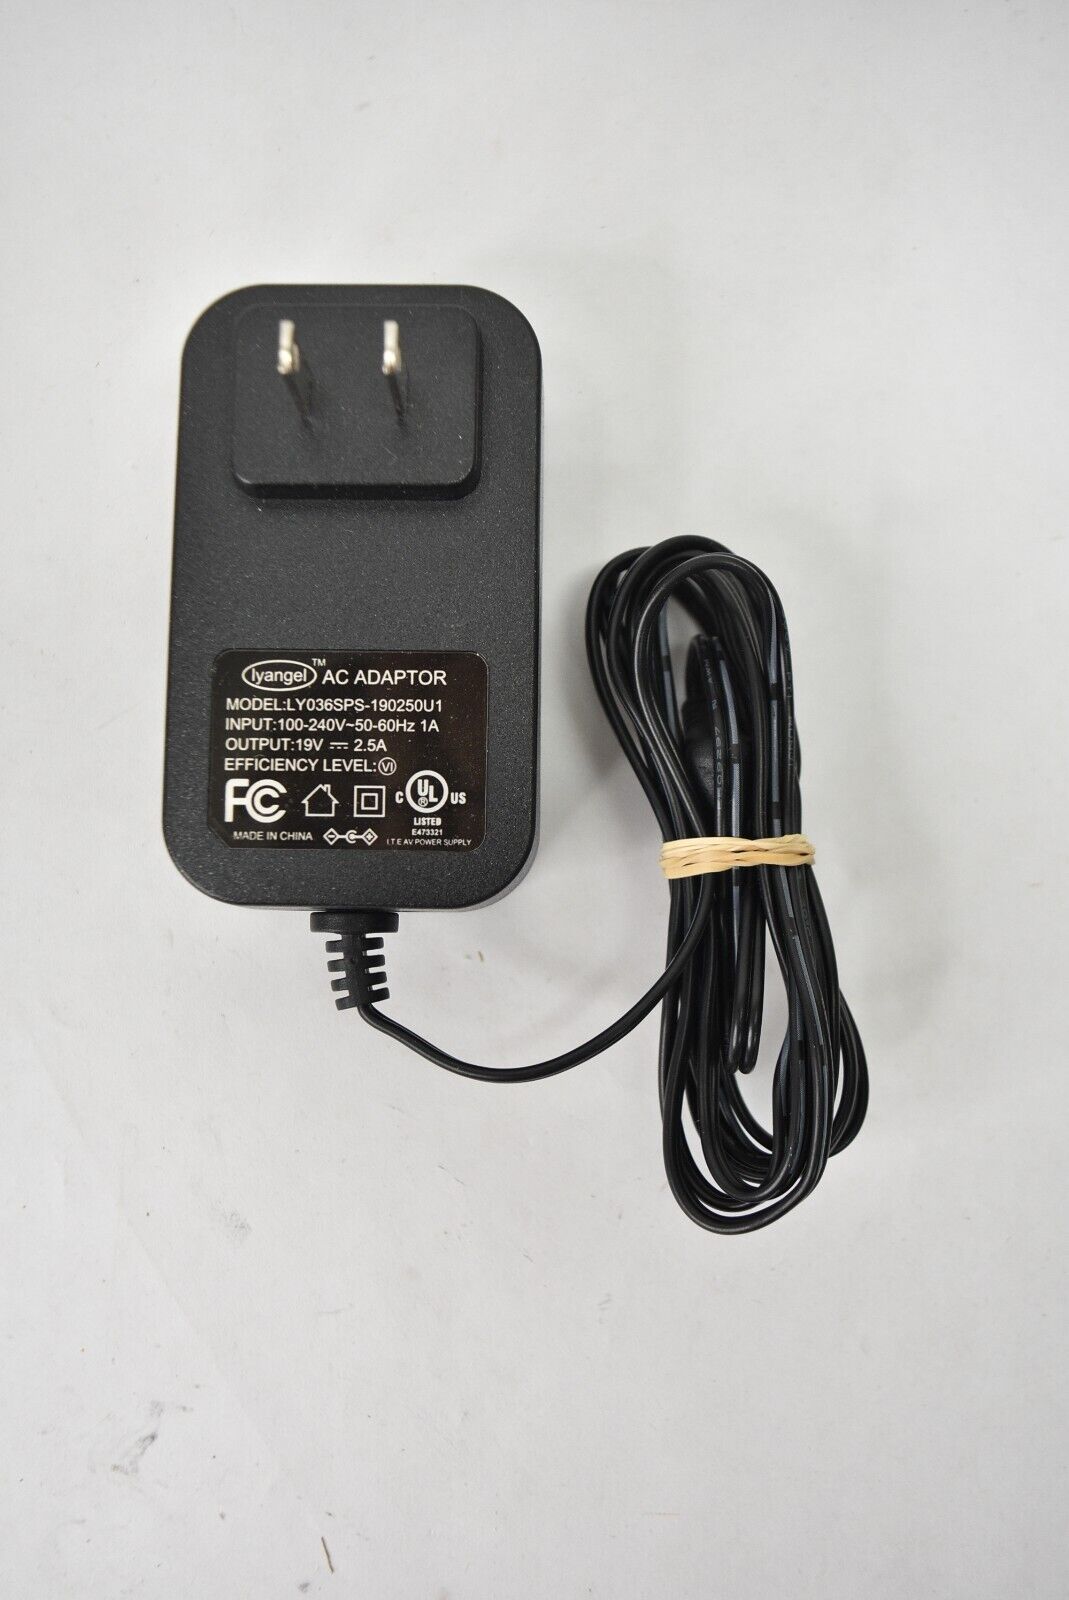 Lyangel AC Adapter Power Supply Unit LY036SPS-190250U1 19V 2.5A Brand: Lyangel Type: Adapter Output Voltage: 19 V - Click Image to Close